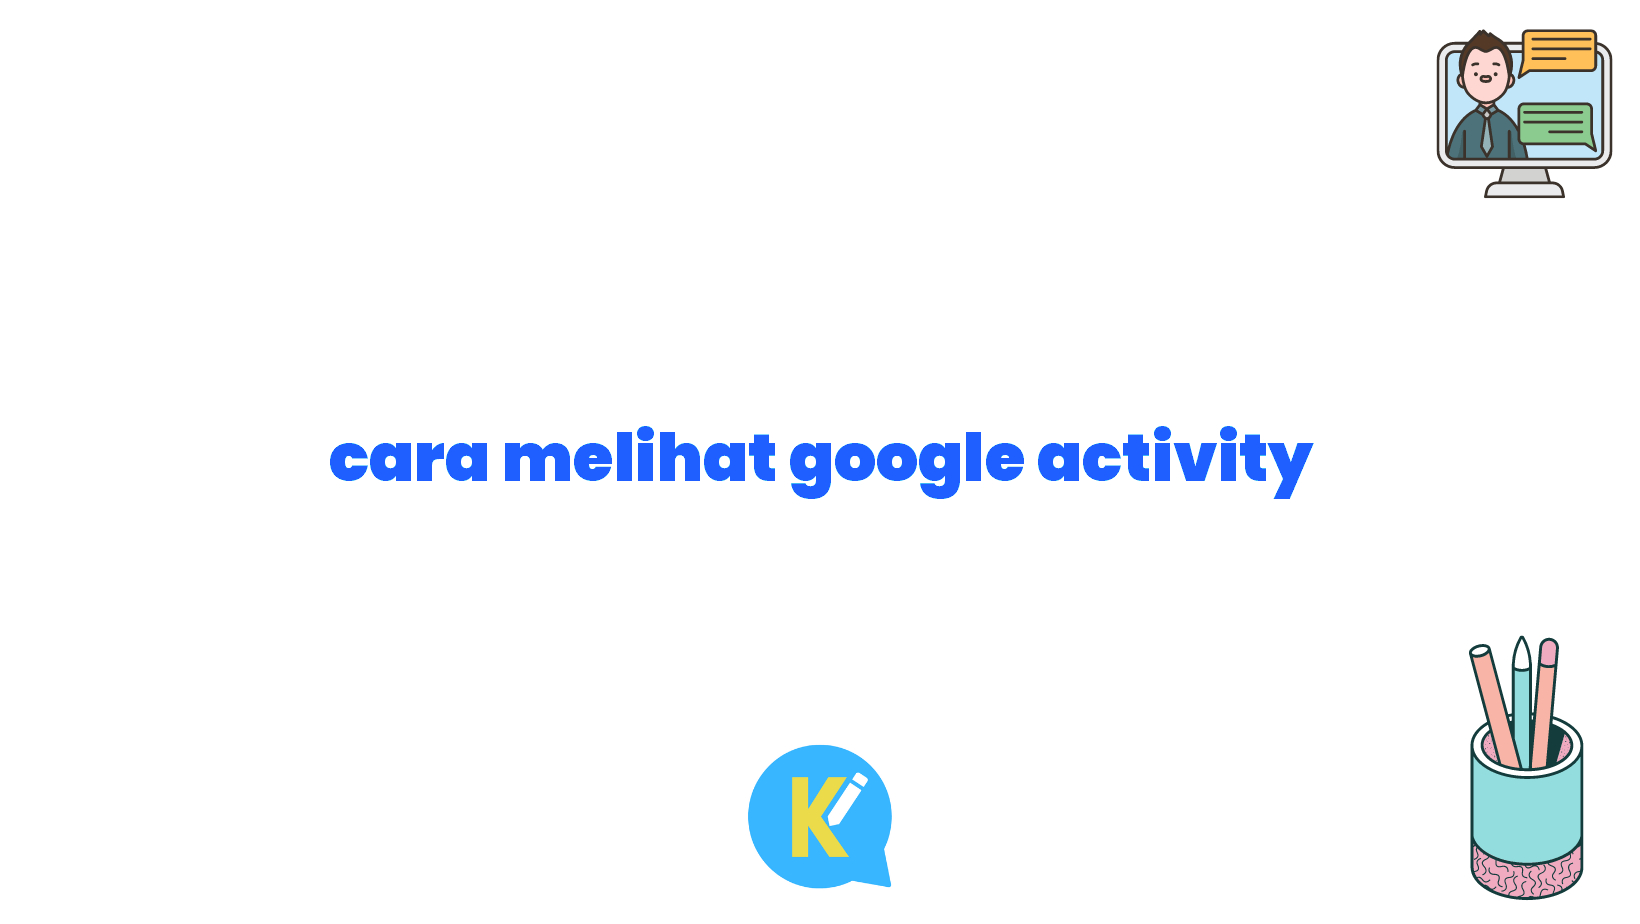 cara melihat google activity